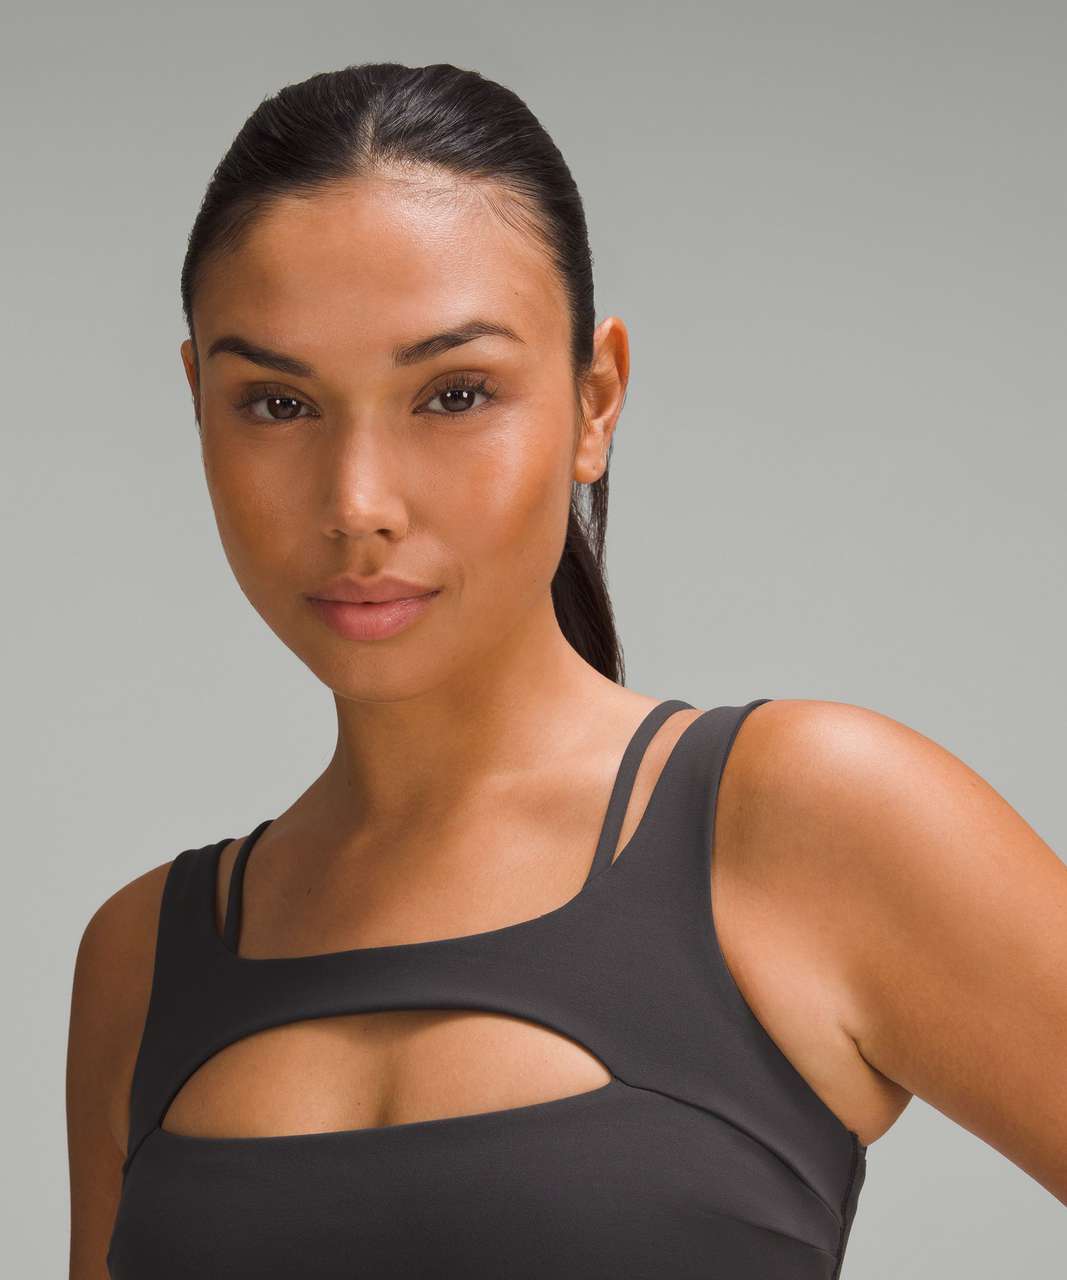 Lululemon Women's Gray Speckled Sports Bra Size 6